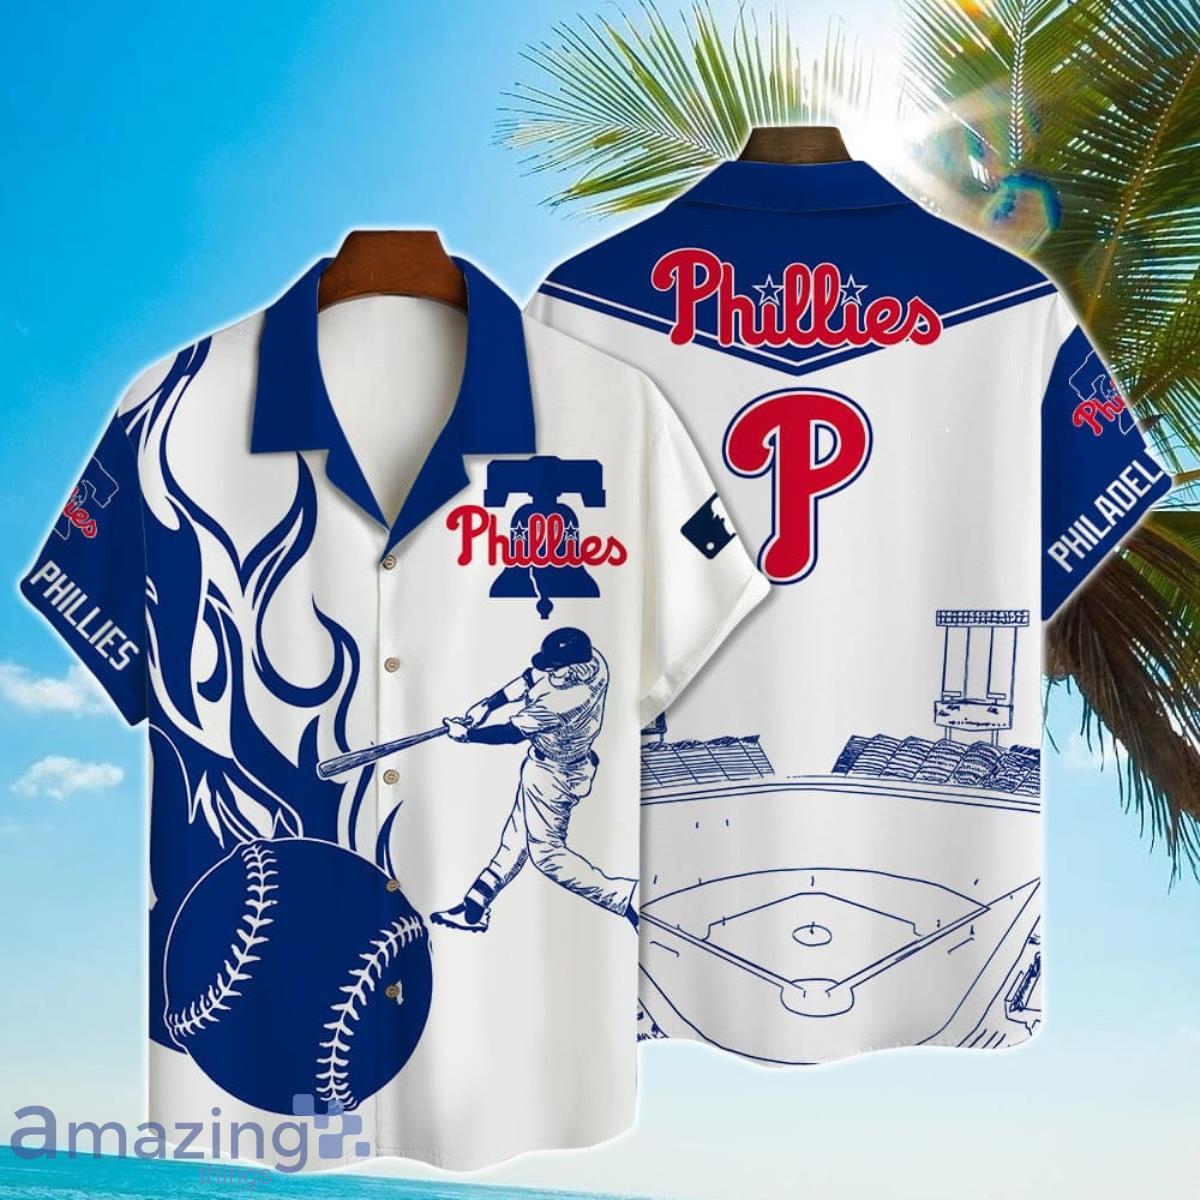 Philadelphia Phillies Upper Deck Baseball Card Graphic T-Shirt World Series!